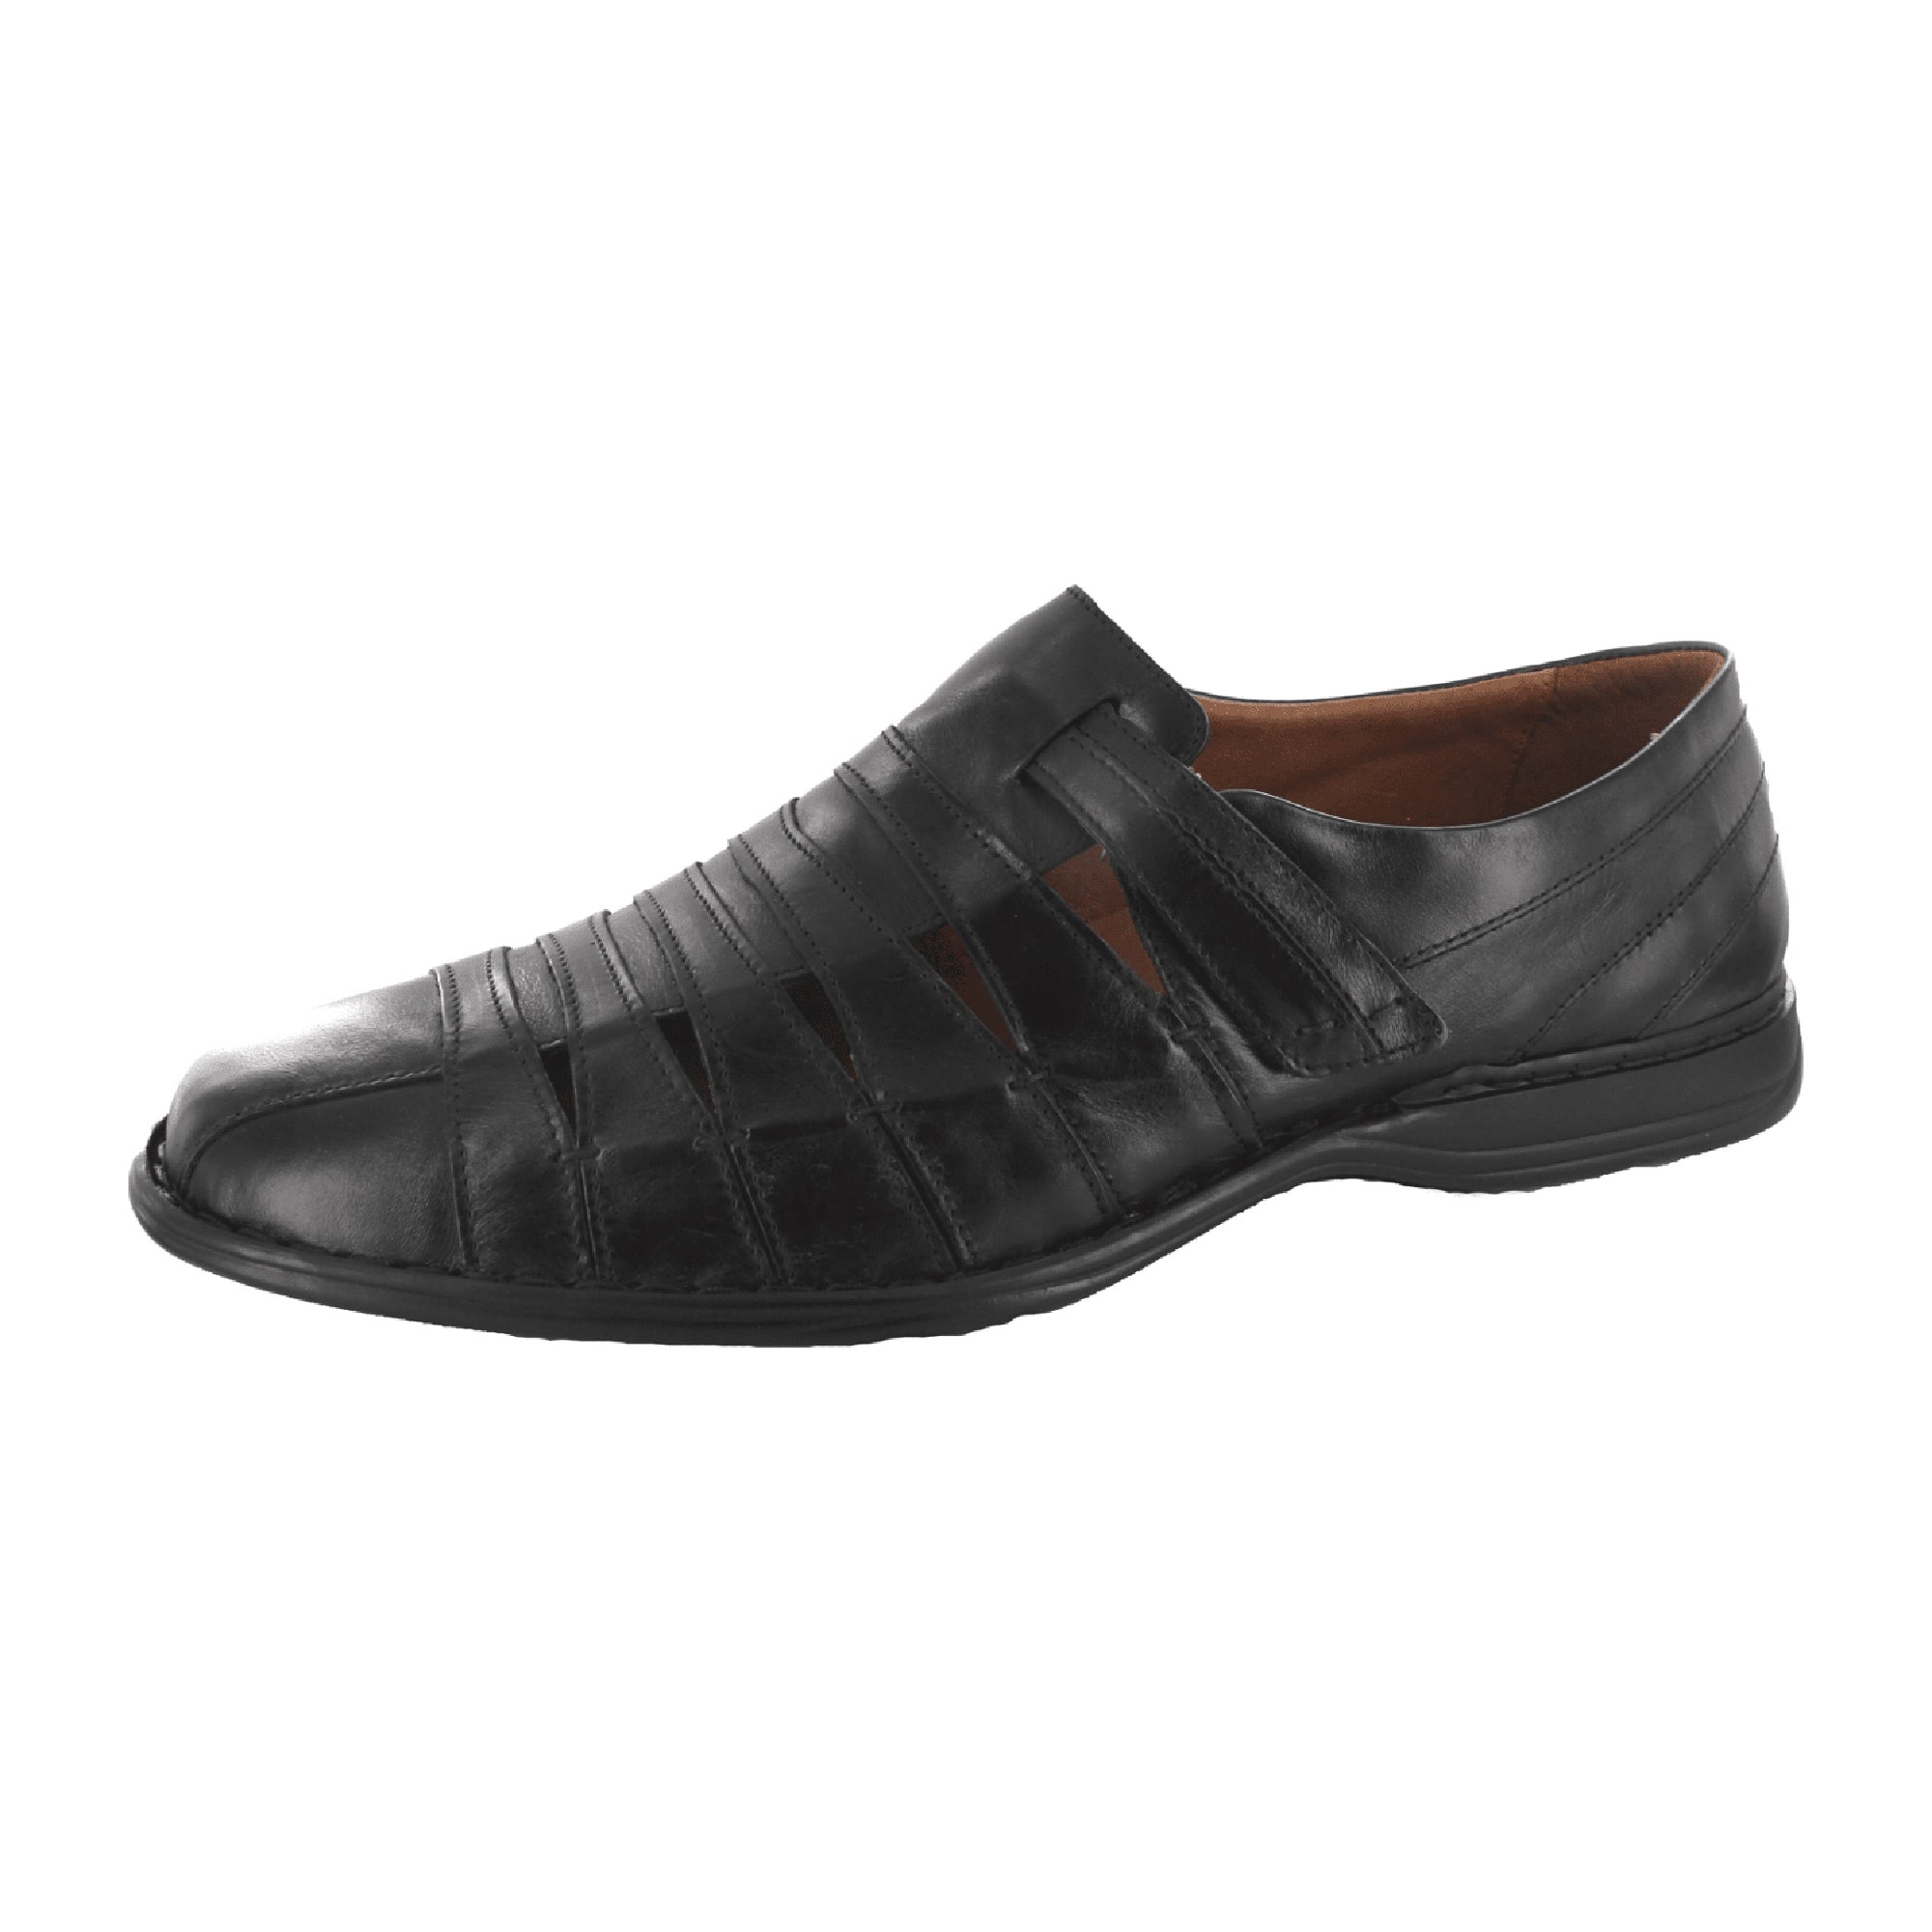 Josef Seibel Steven Men's Shoes in Black